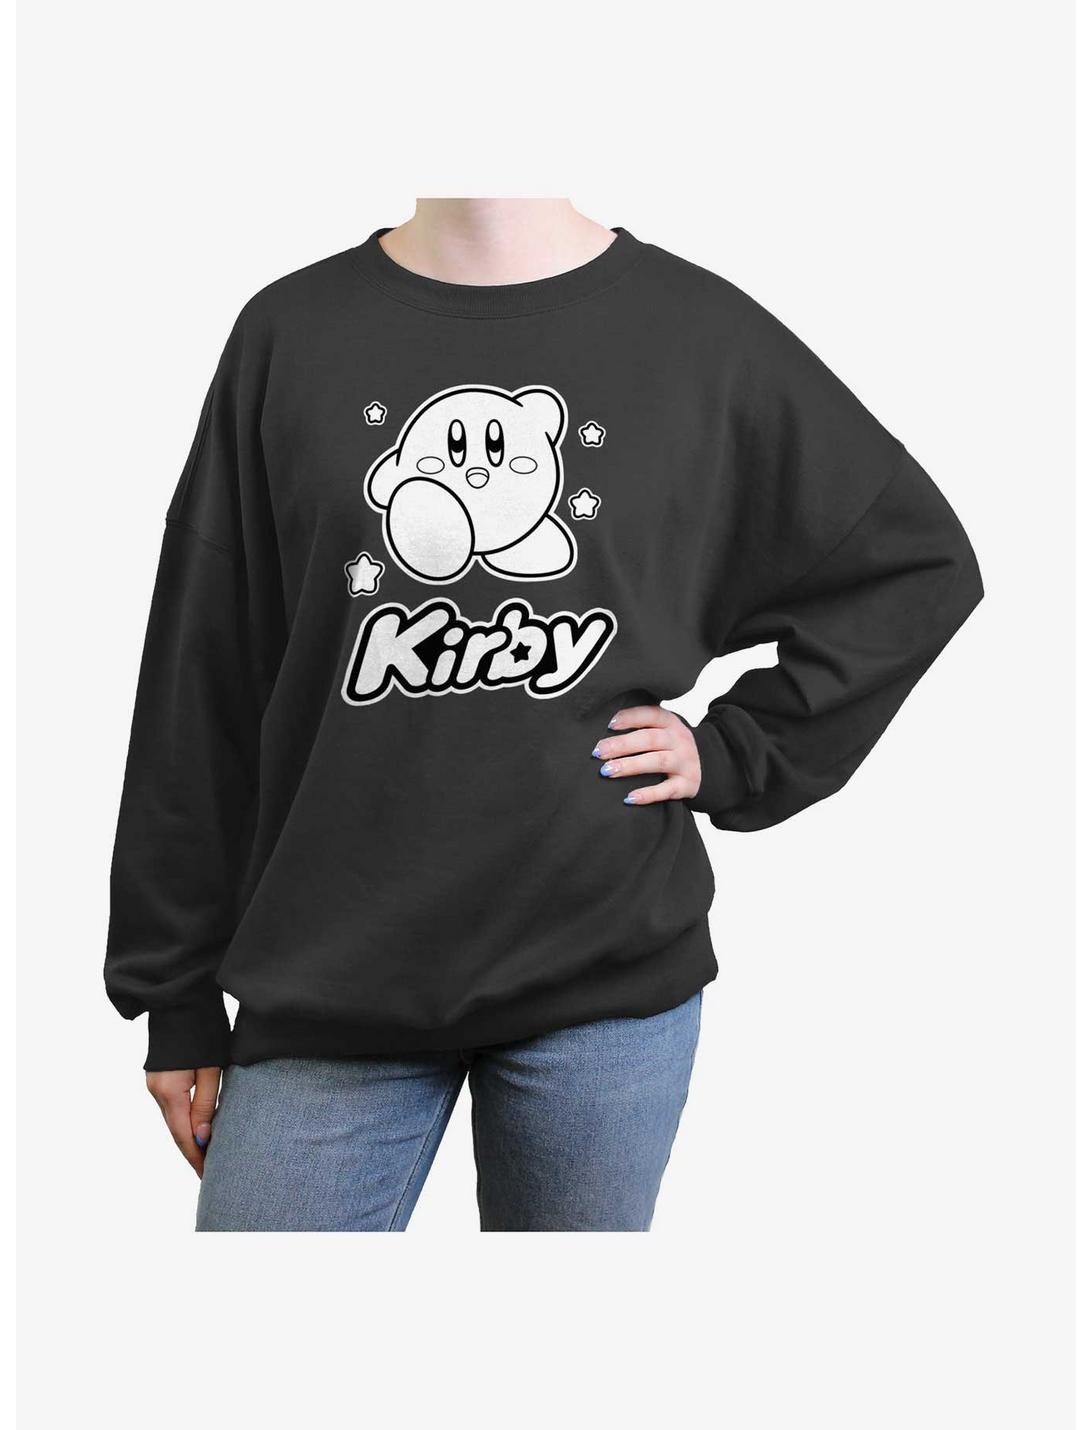 Kirby Monochrome Kirby Womens Oversized Sweatshirt, CHARCOAL, hi-res